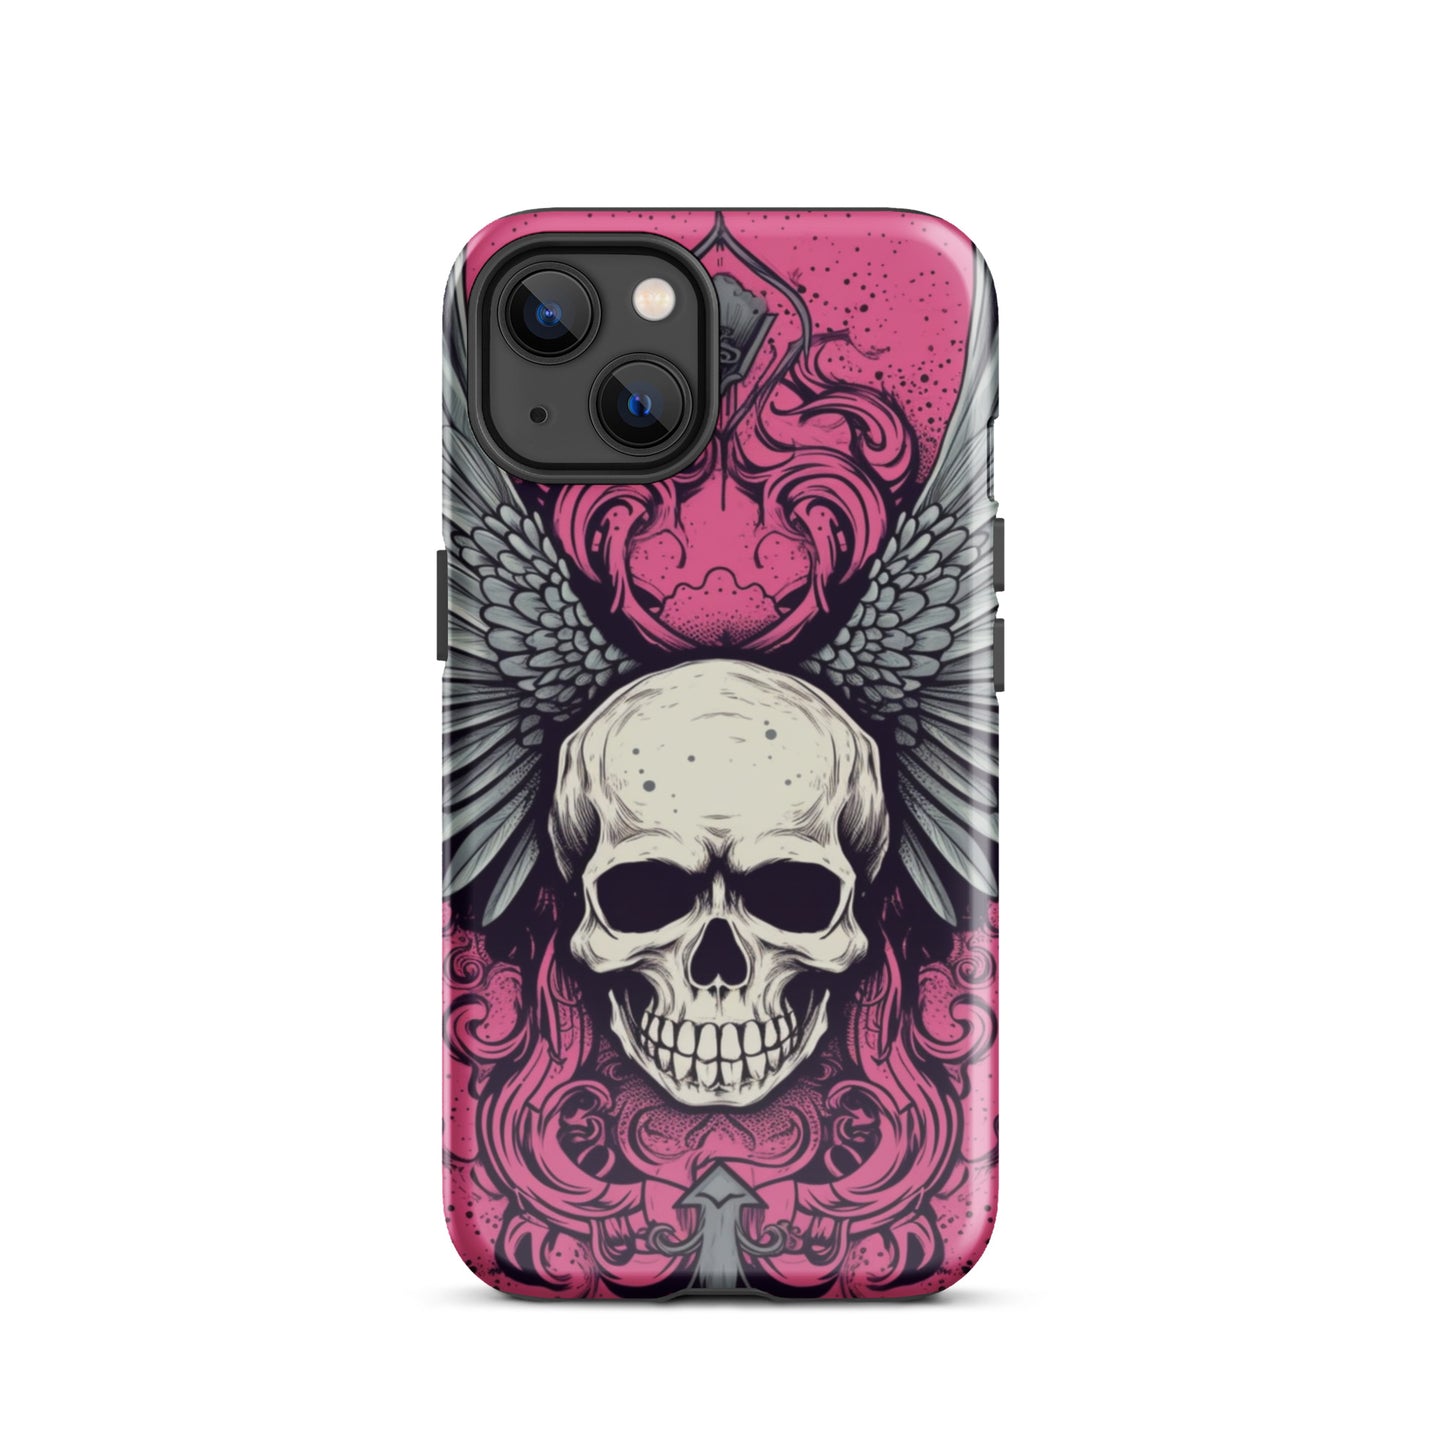 Skull Tough Case, Shockproof Phone Case,Cool Designed Phone Cases, Pocket-friendly